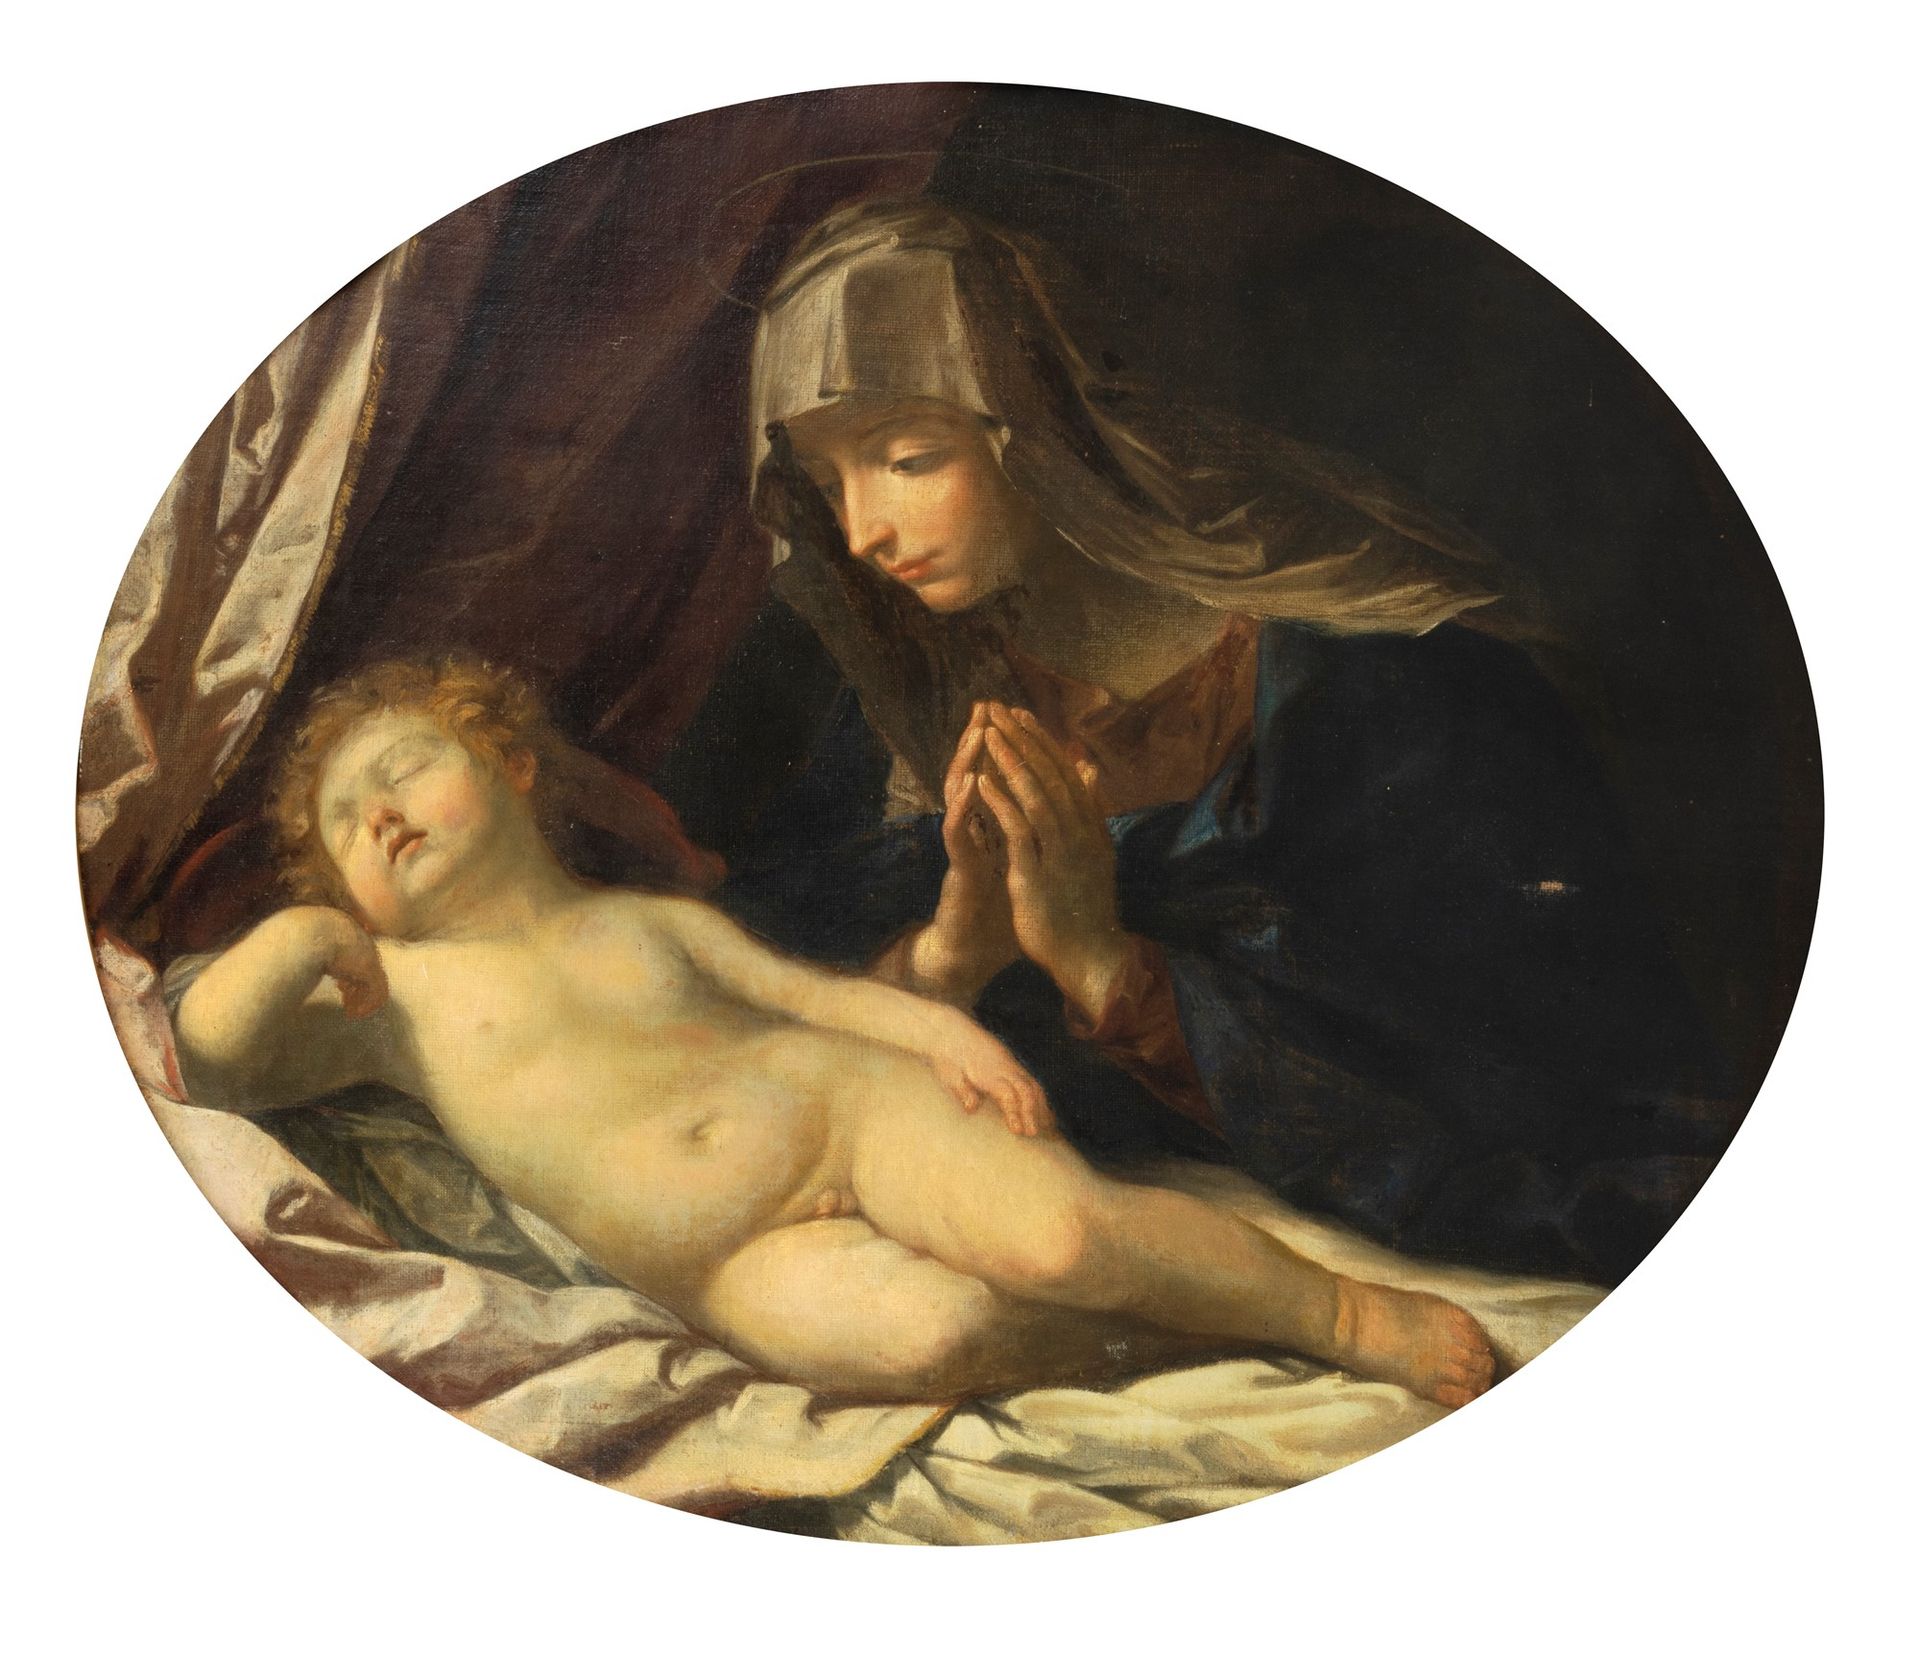 Null 埃米利安纳学校，第十七世纪，吉多-雷尼--崇拜沉睡中的孩子的圣母像

椭圆形画布上的油画
94 x 112厘米